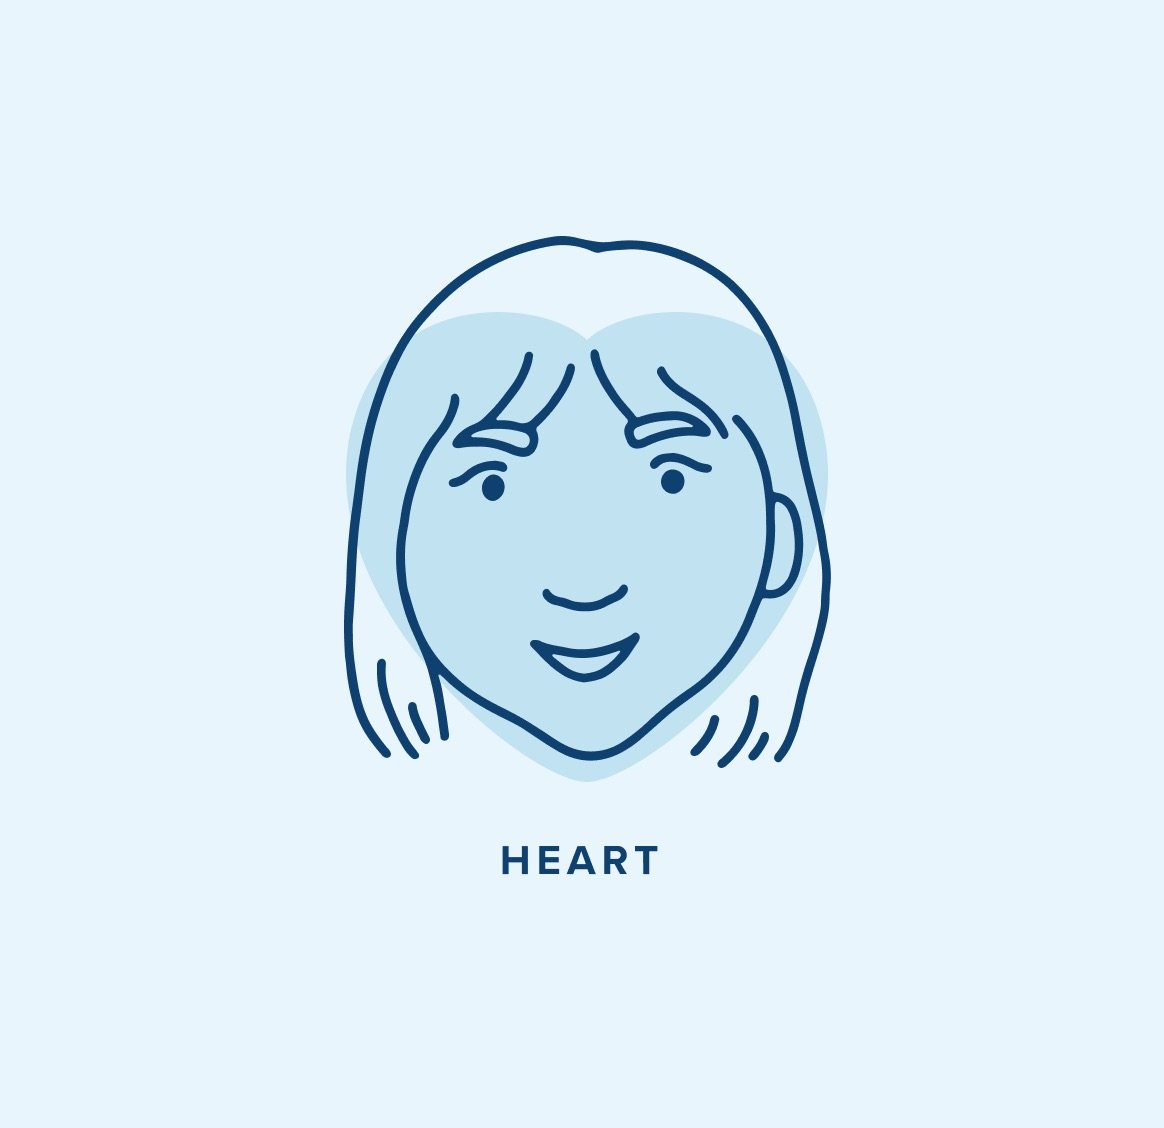 Illustration of a heart face shape